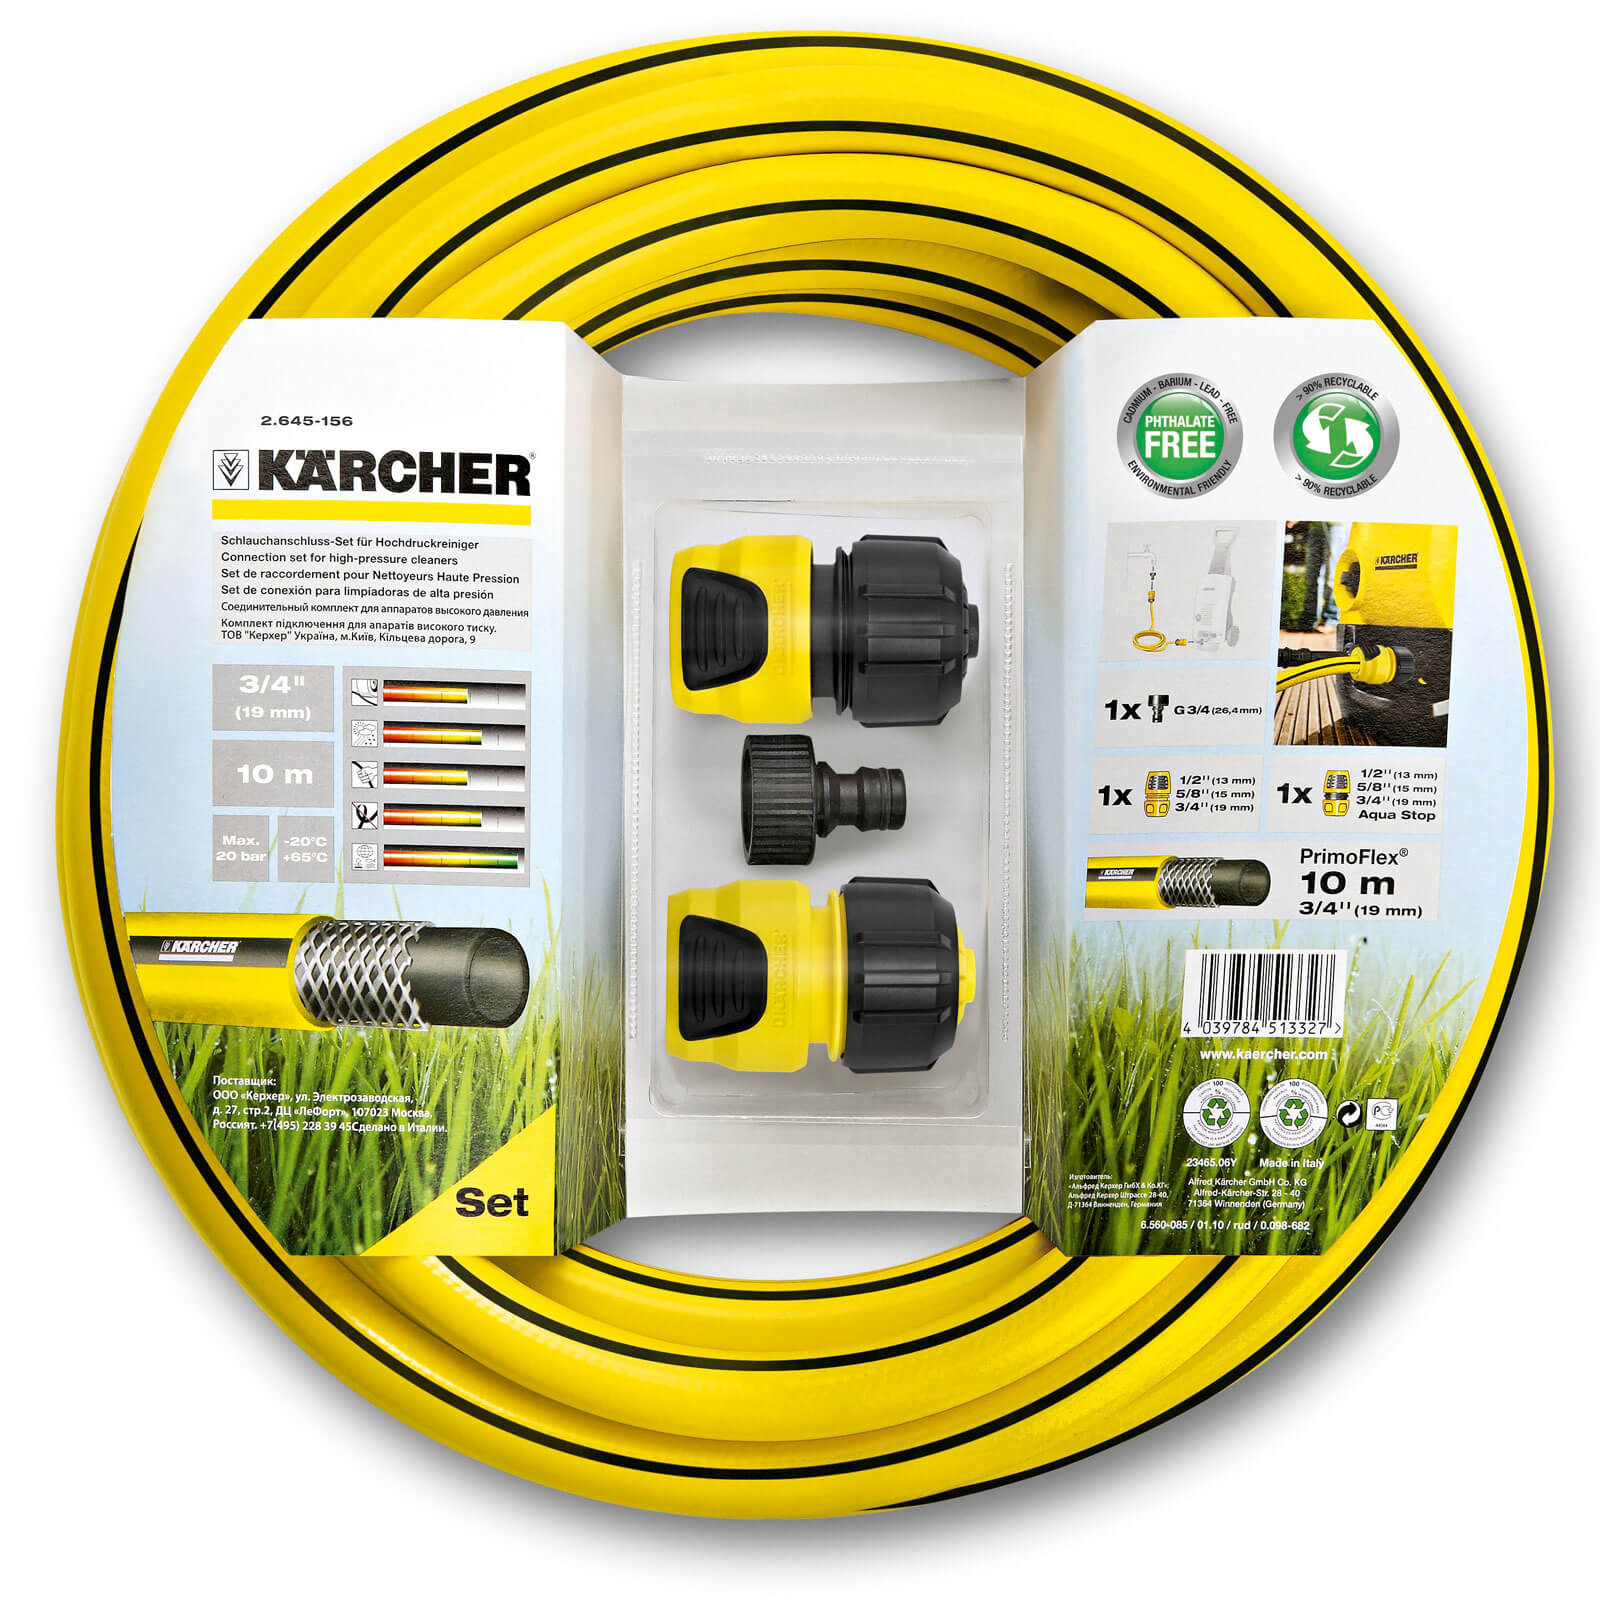 Photos - Garden Hose Karcher Pressure Washer Hose Connection Kit 3/4" / 19mm 10m Yellow & Black 